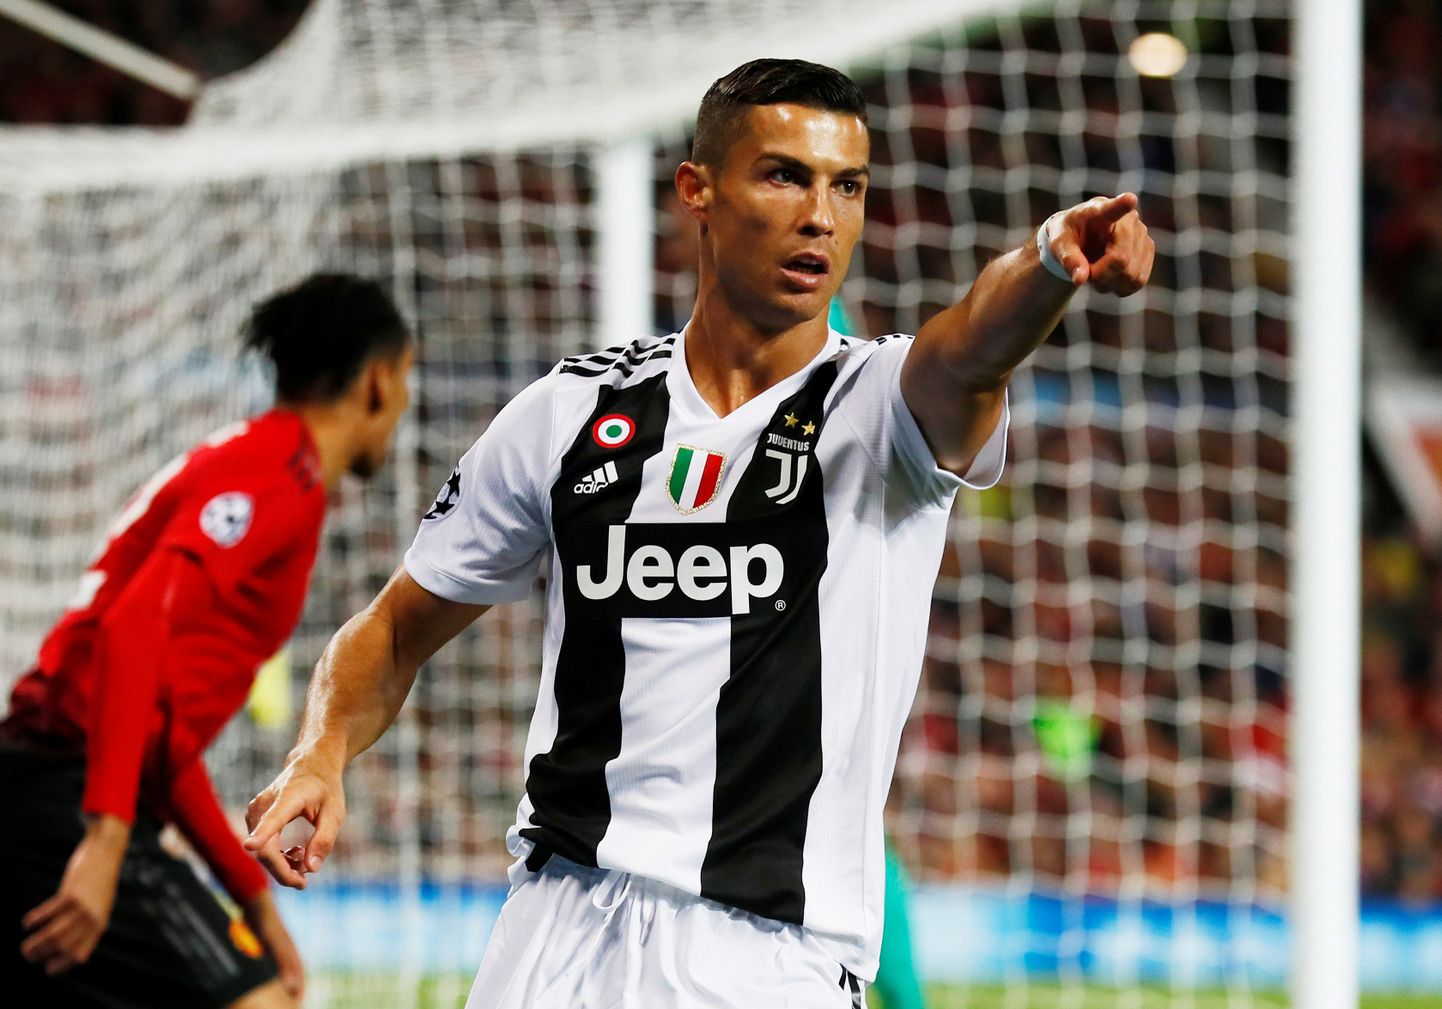 Naisfännid on Cristiano Ronaldo kubeme läikima löönud